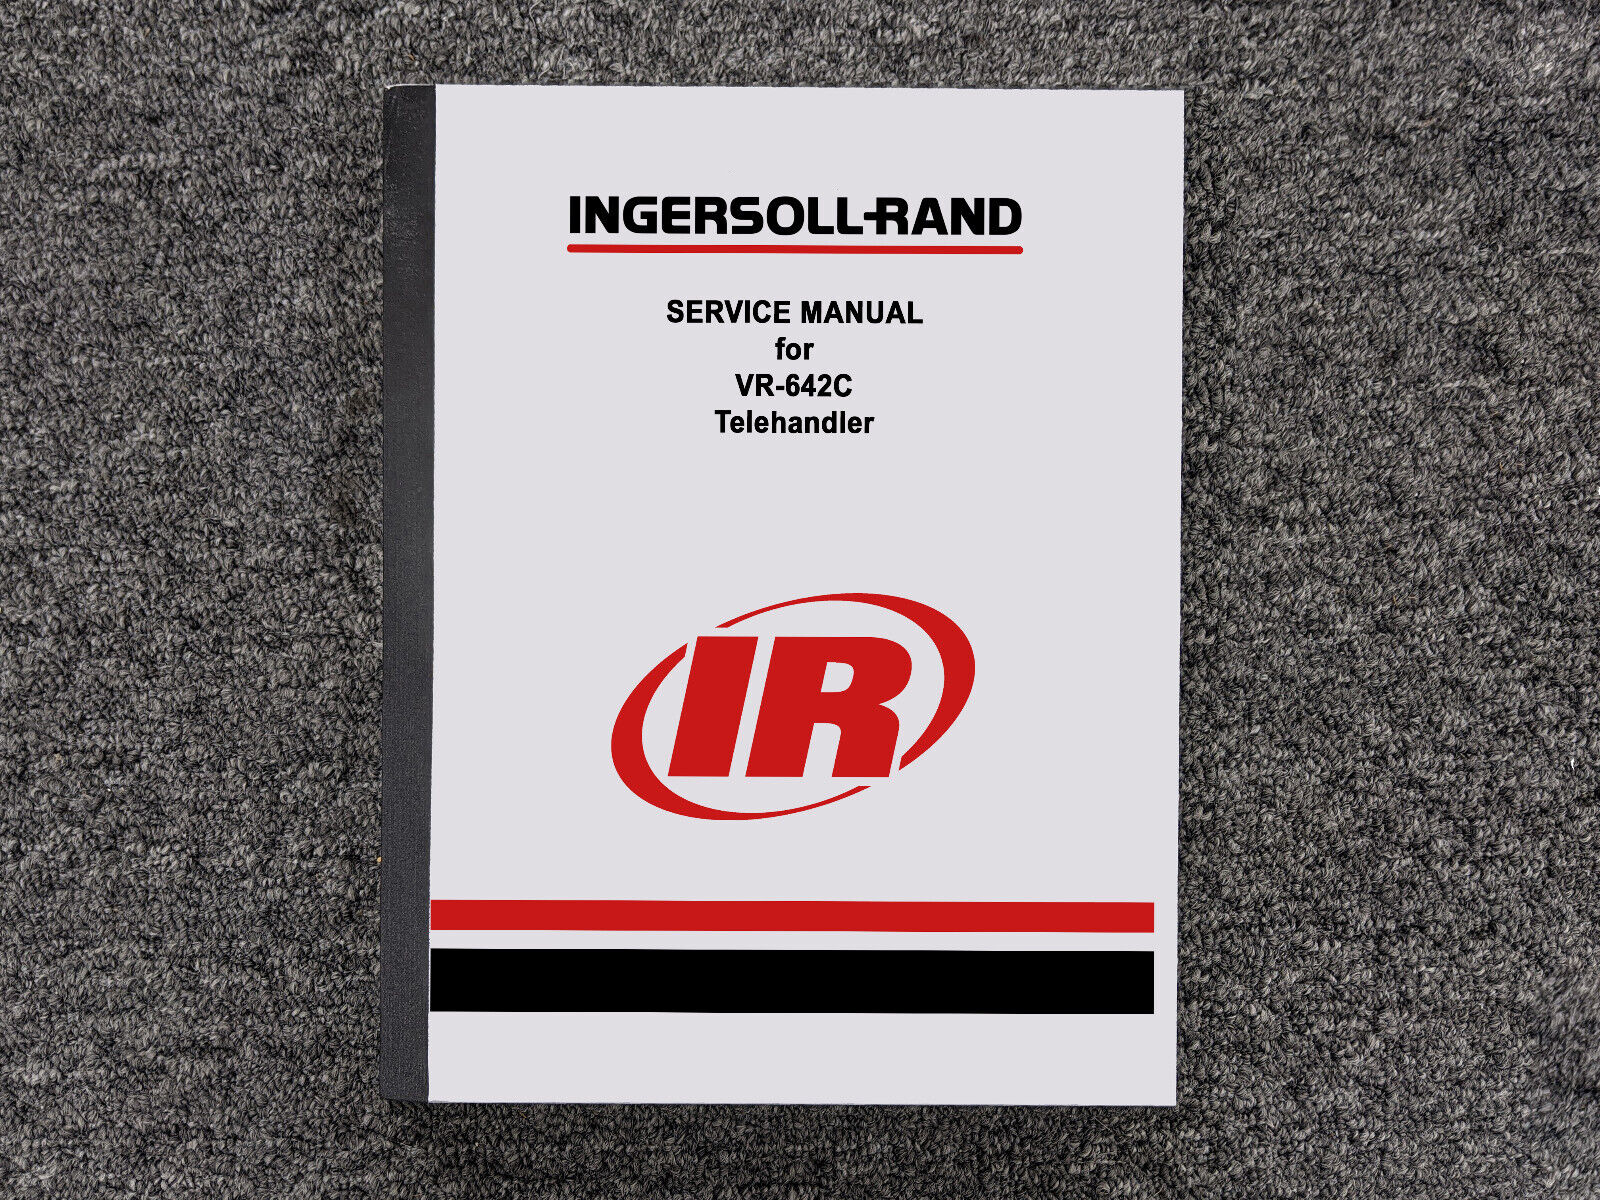 Ingersoll-Rand Telehandler VR-642C Repair Service Shop Manual